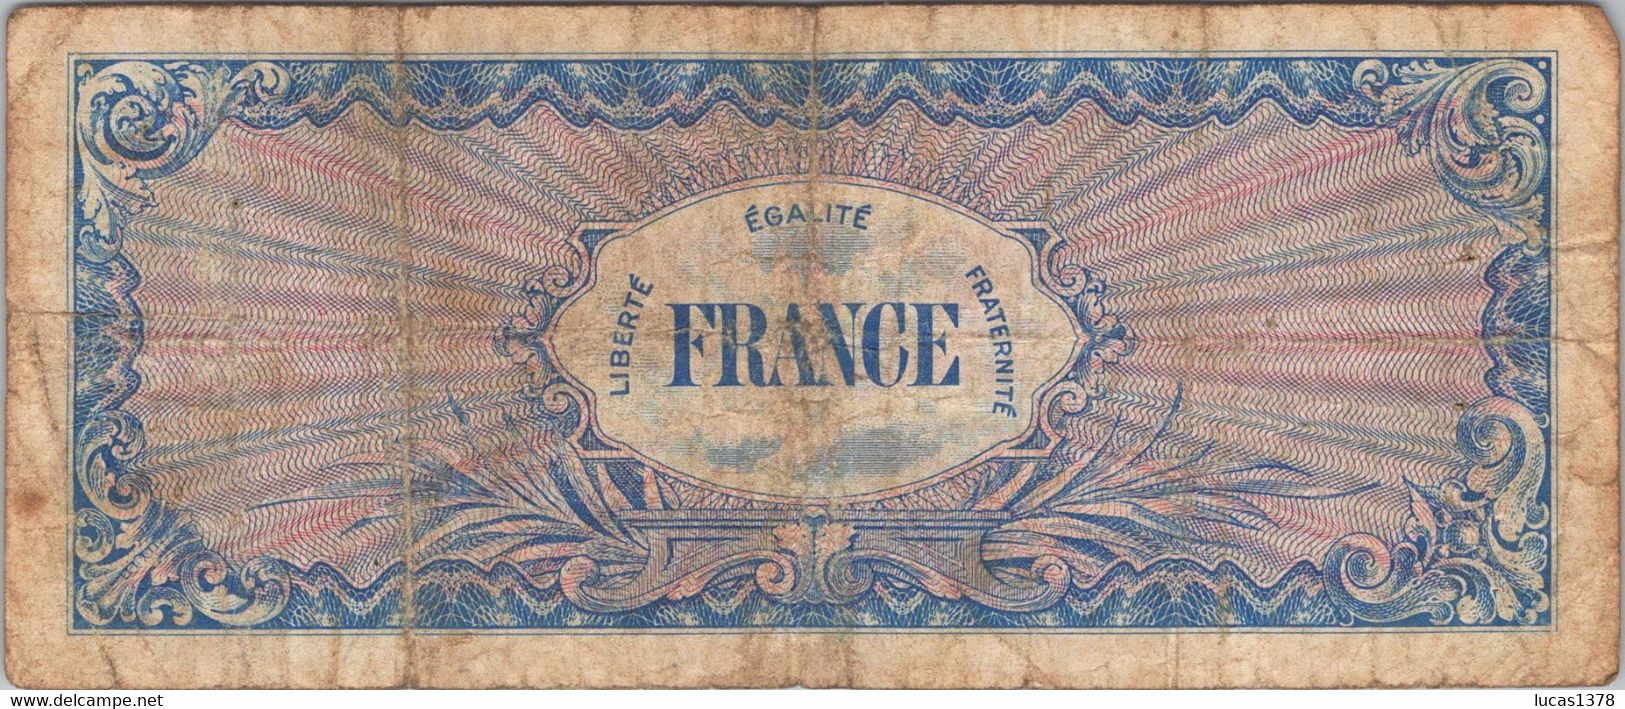 - FRANCE - BILLET - TRESOR - DRAPEAU FRANCE - 50 F - SERIE DE 1944 - N° 43214200 - 1944 Flag/France